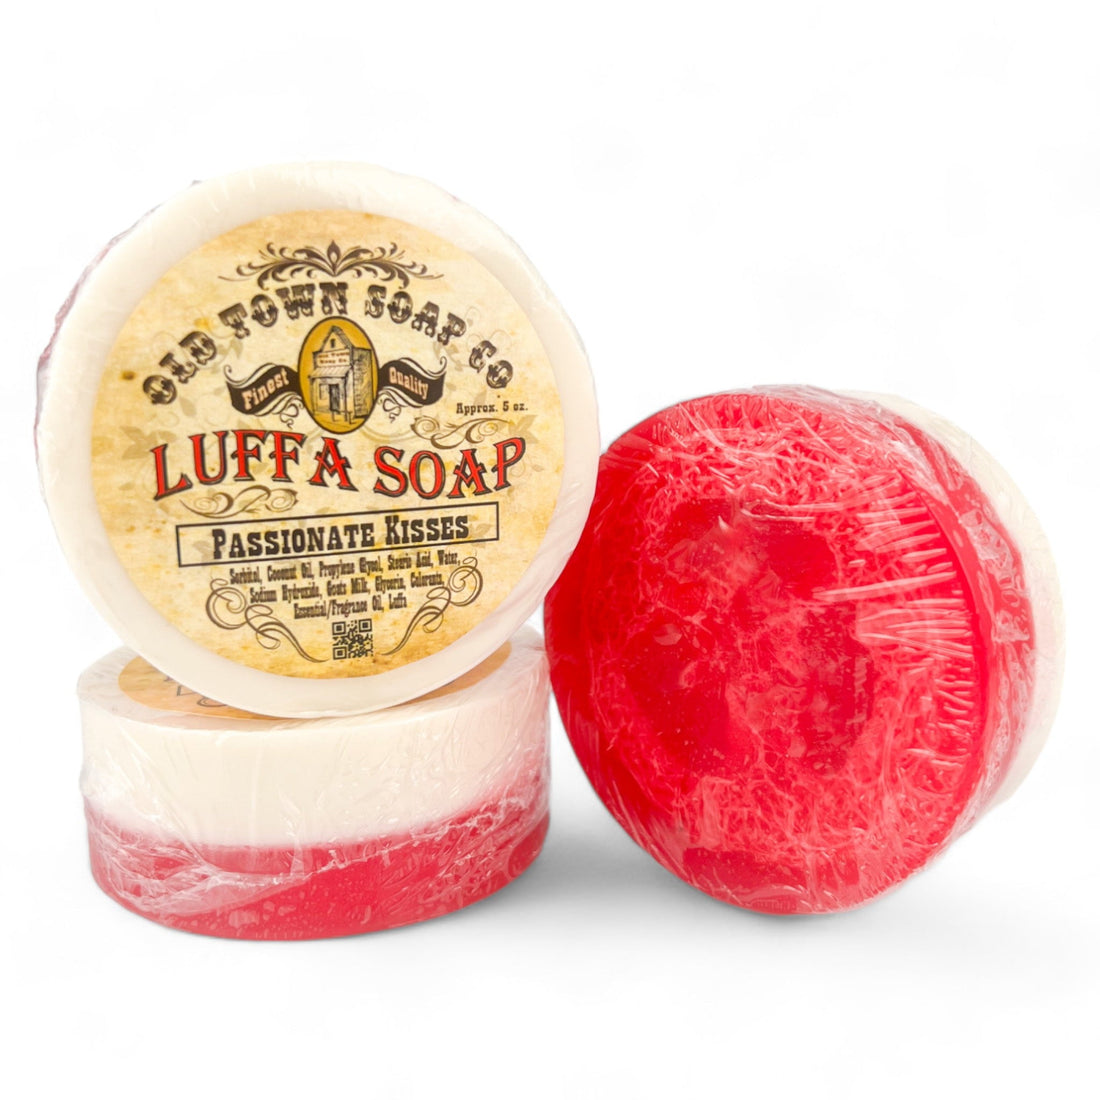 Passionate Kisses -Luffa Soap - Old Town Soap Co.